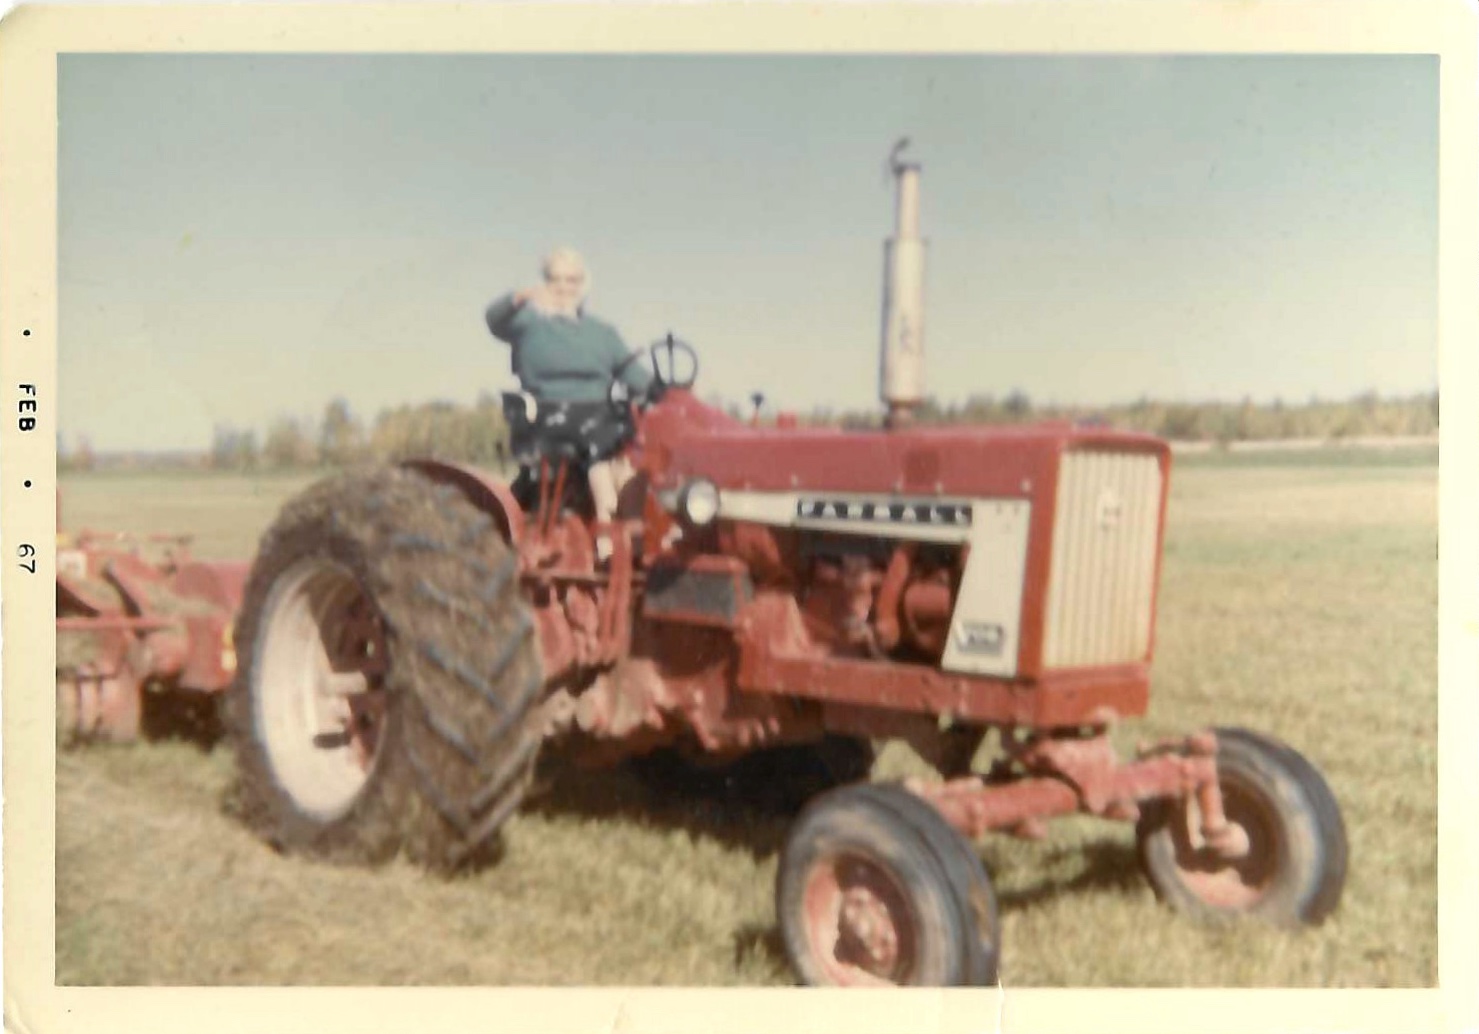 Great Grandma Emma Riemer on a red Farmall tractor in February 1967